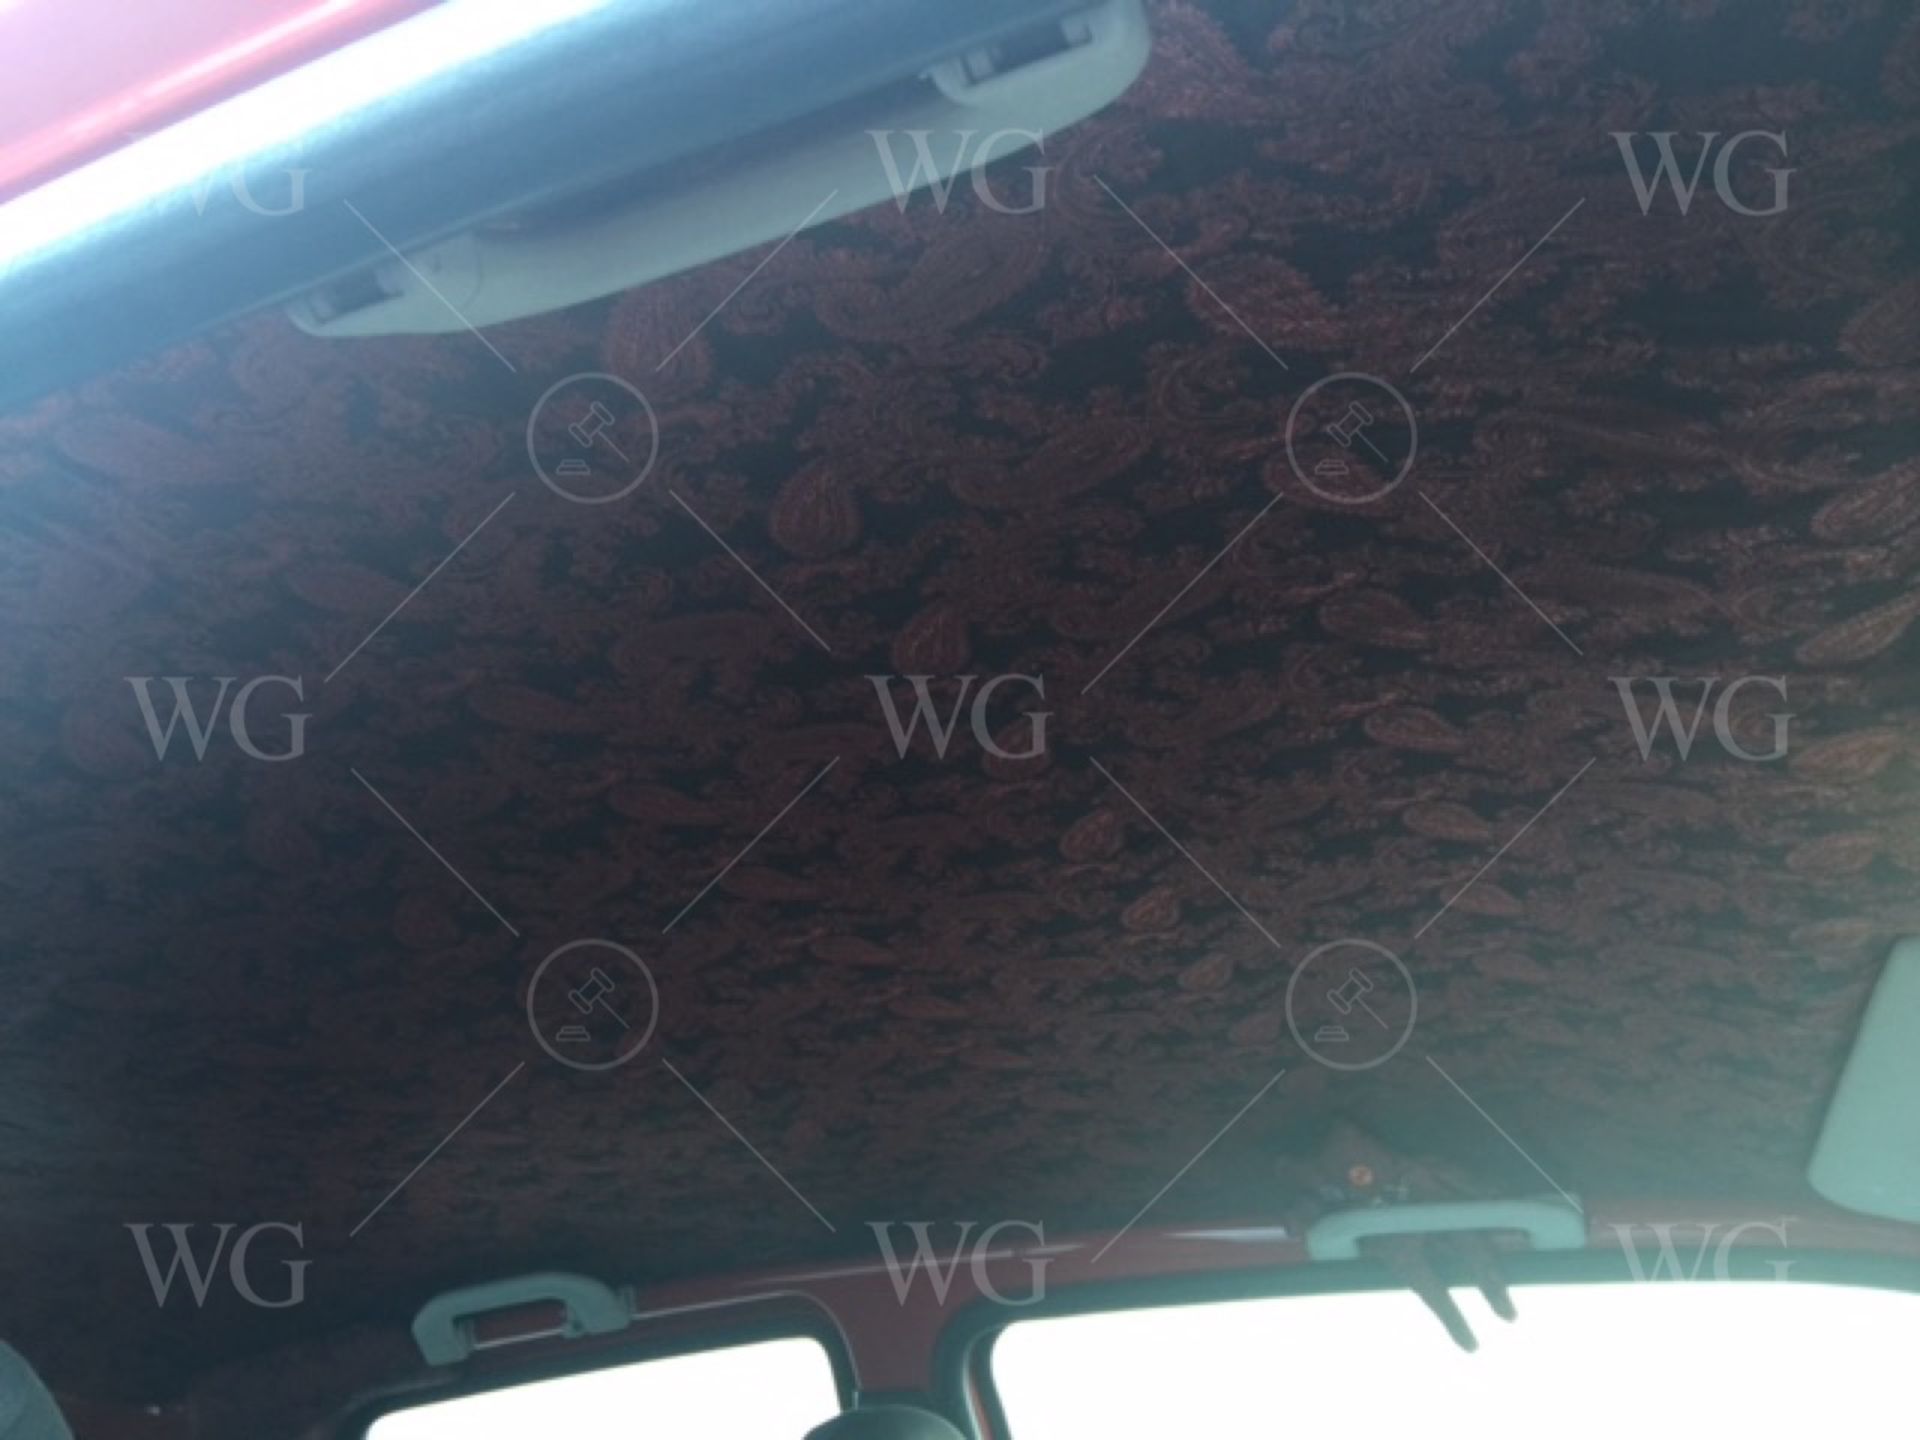 03 Volkswagen Lupo s rat look 3door hatch 1390cc Snazzy rooflineing with matching teddy bear wide - Image 10 of 19